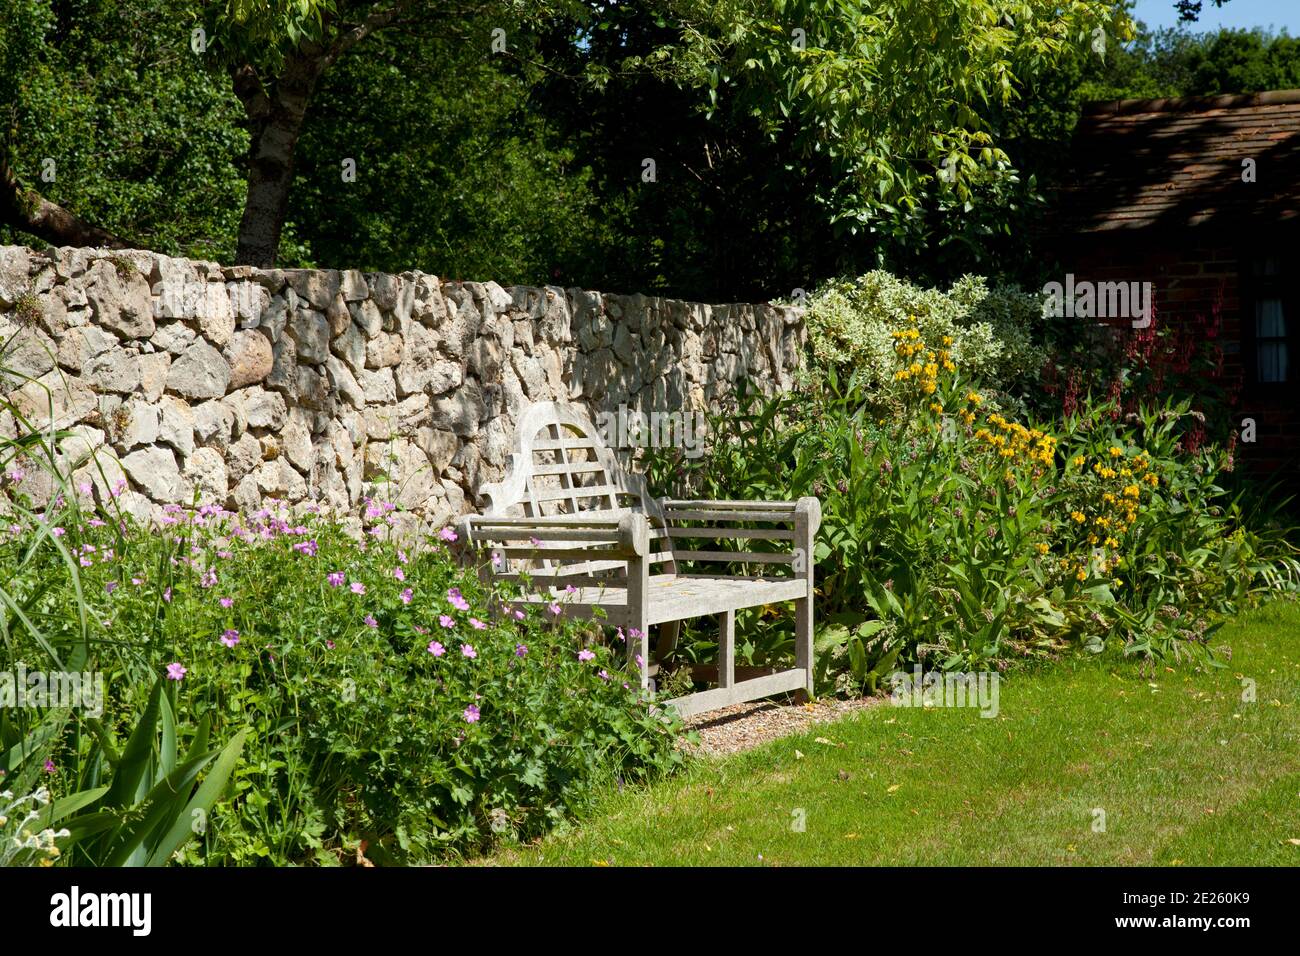 Lutyens bench against stone wall in garden Stock Photo